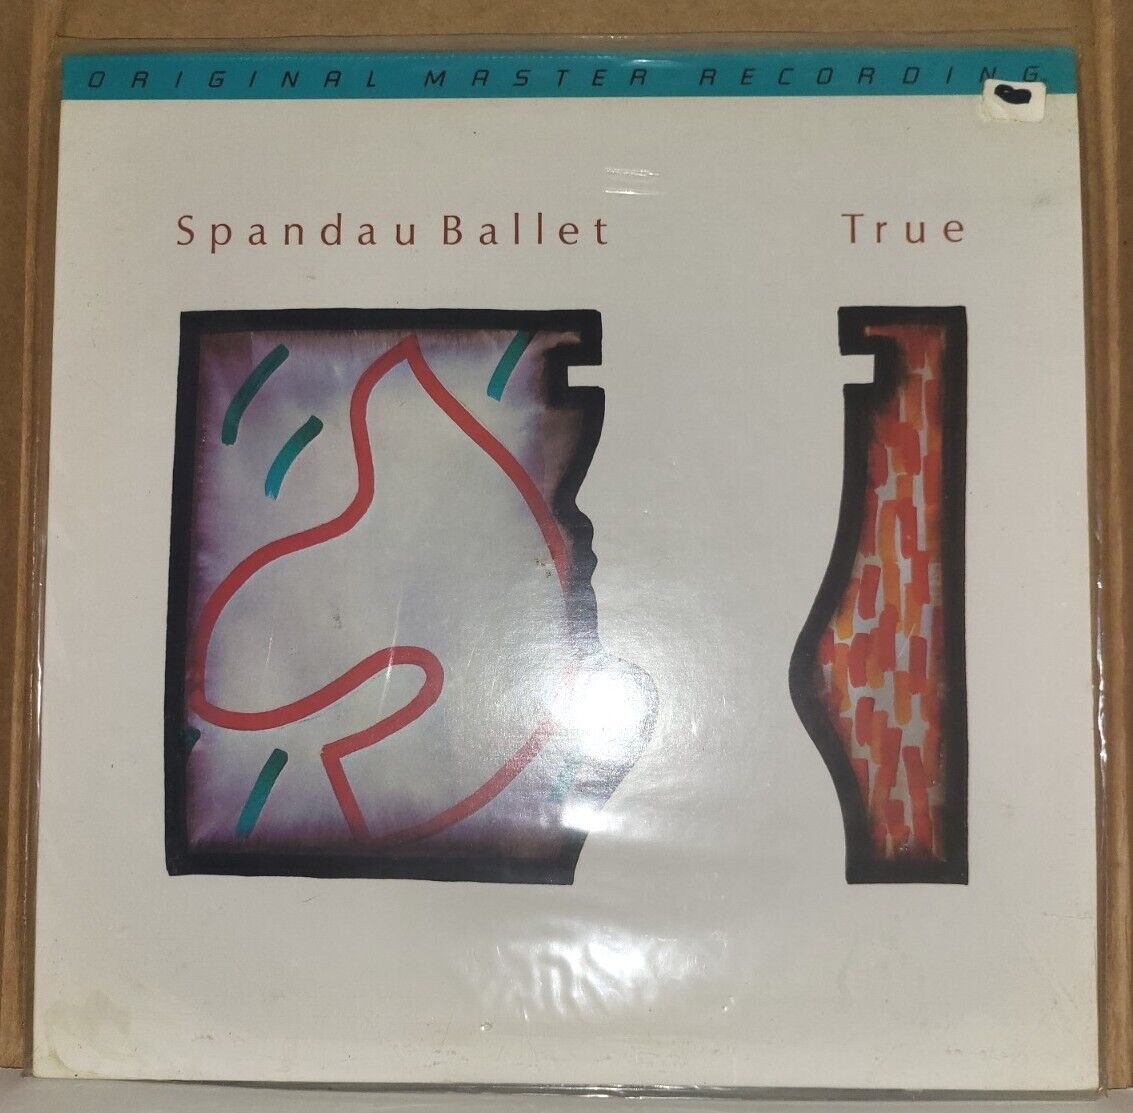 Spandau Ballet - True - SEALED MFSL Original Master Recording